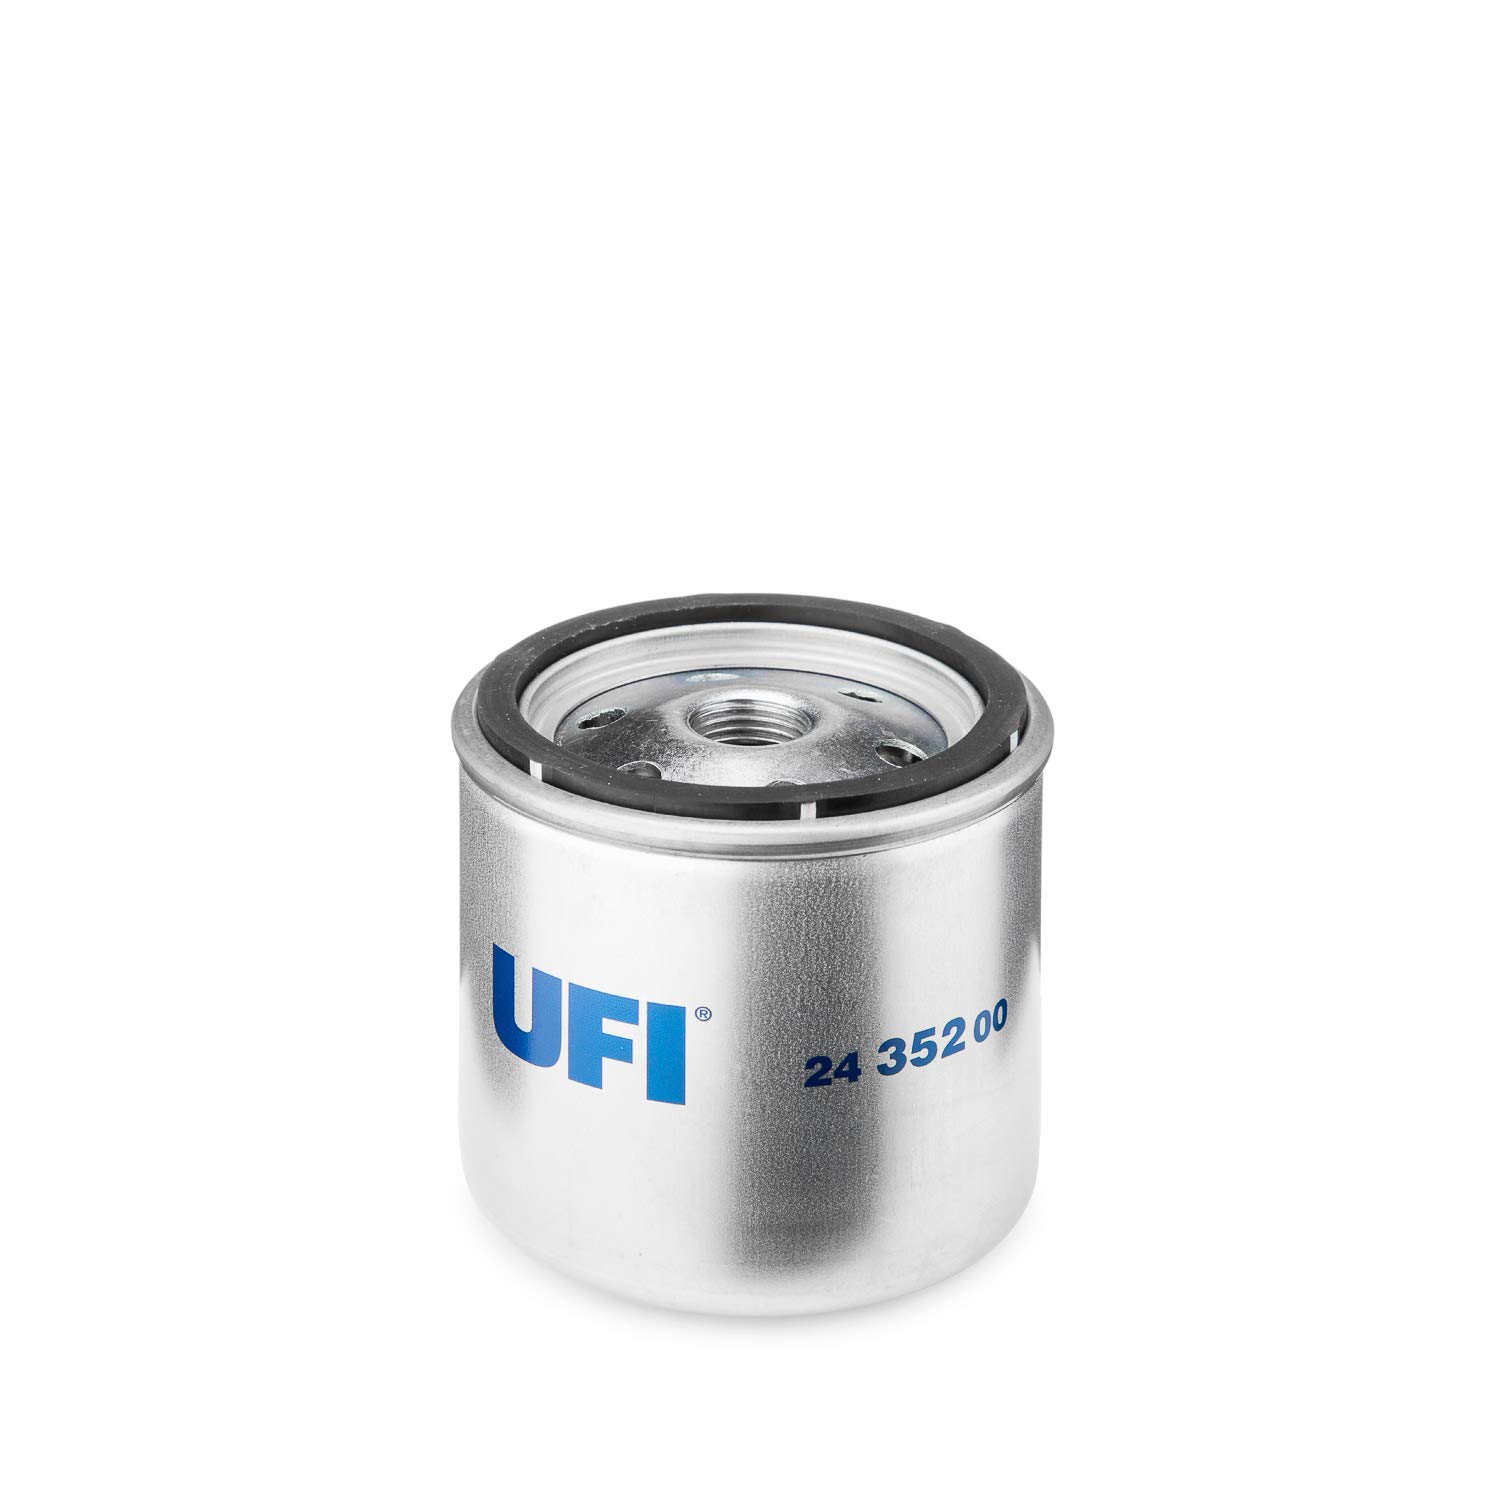 UFI FILTERS Filters 24.352.00 Dieselfilter von UFI